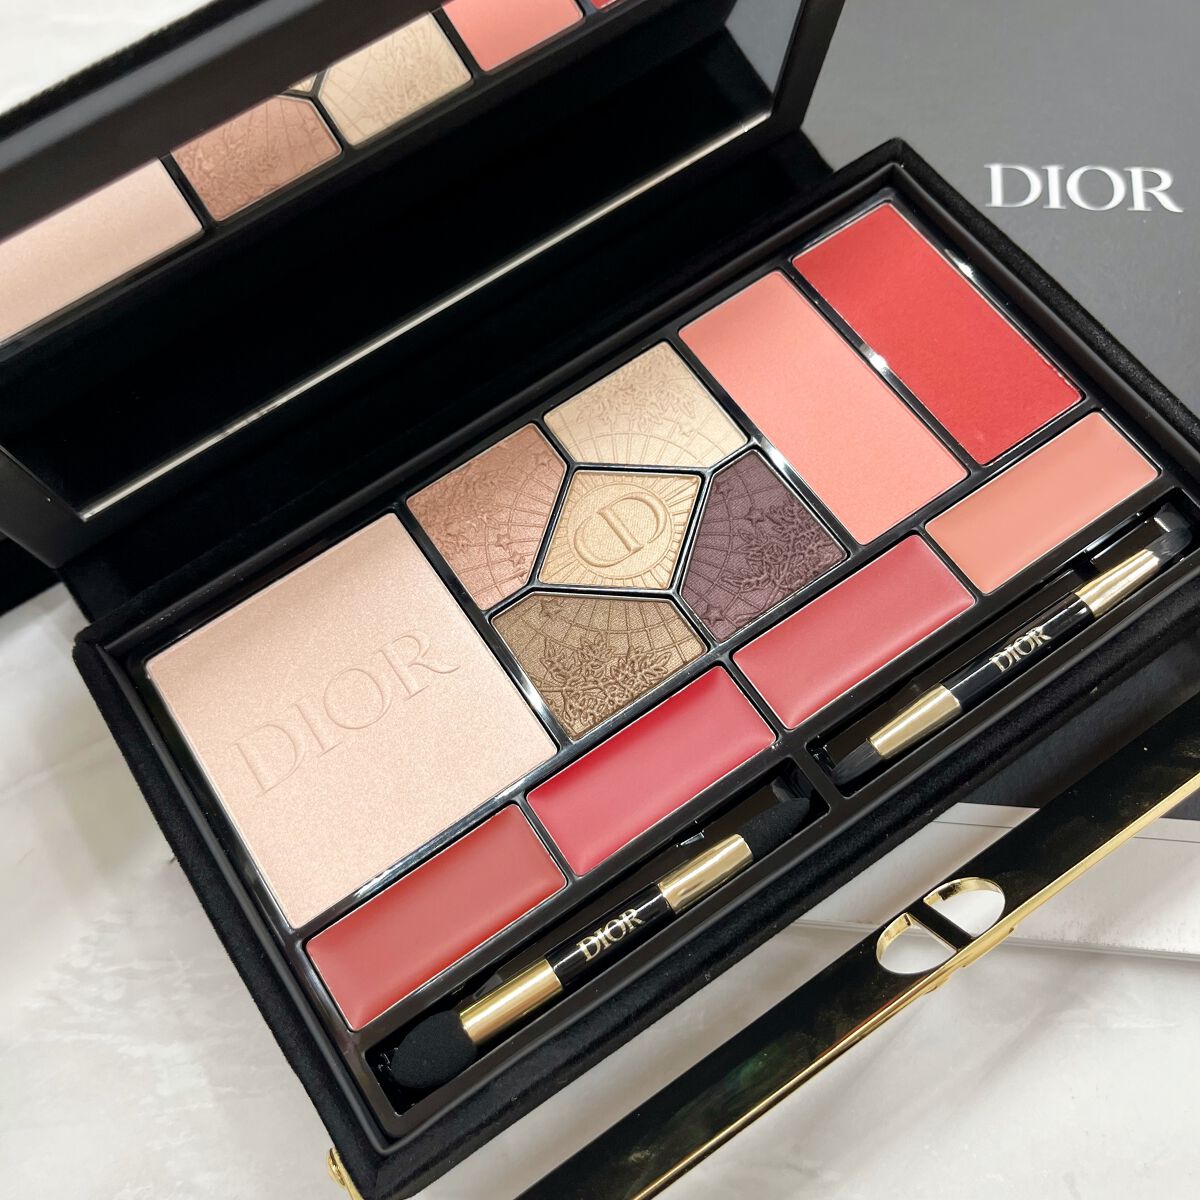 Dior Beauty Lovers on LIPS 「華やかなホリデー シーズンを彩る